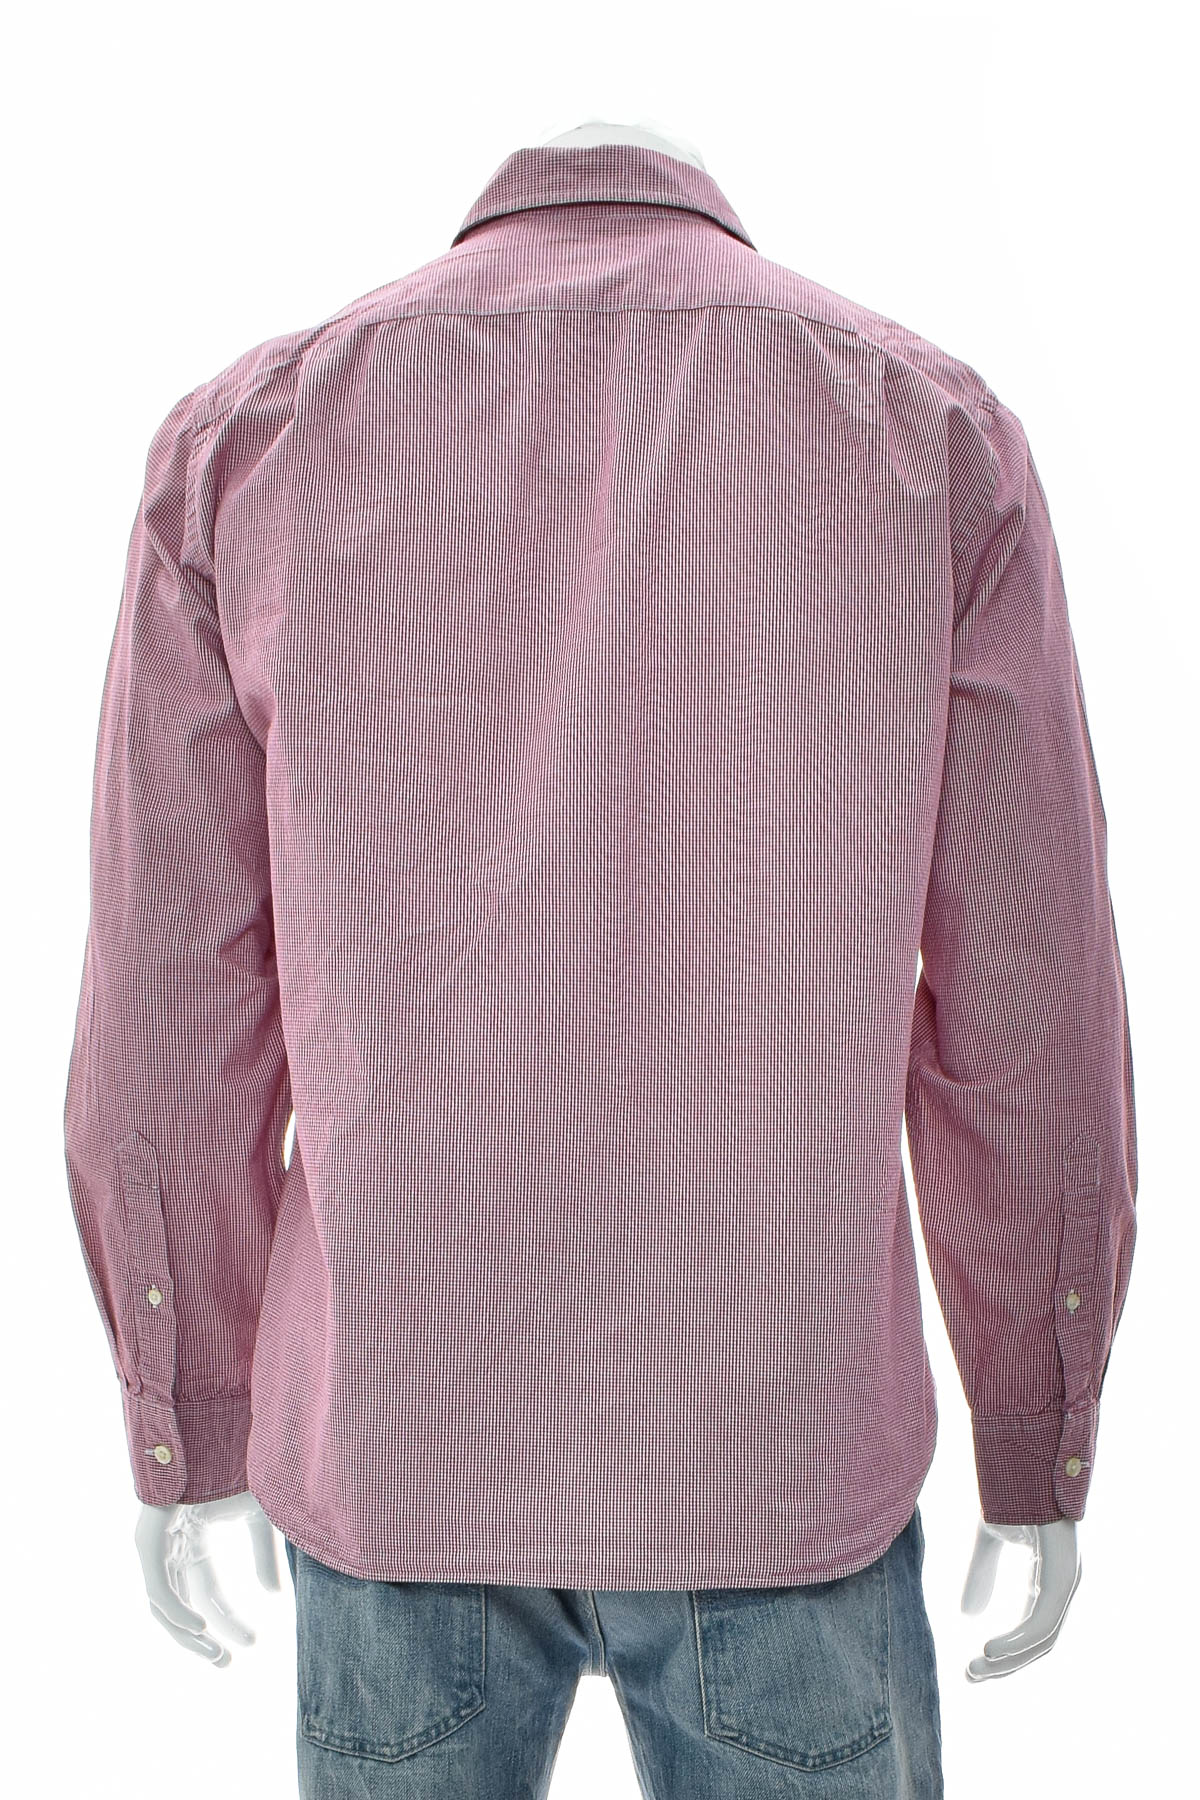 Men's shirt - J.CREW - 1